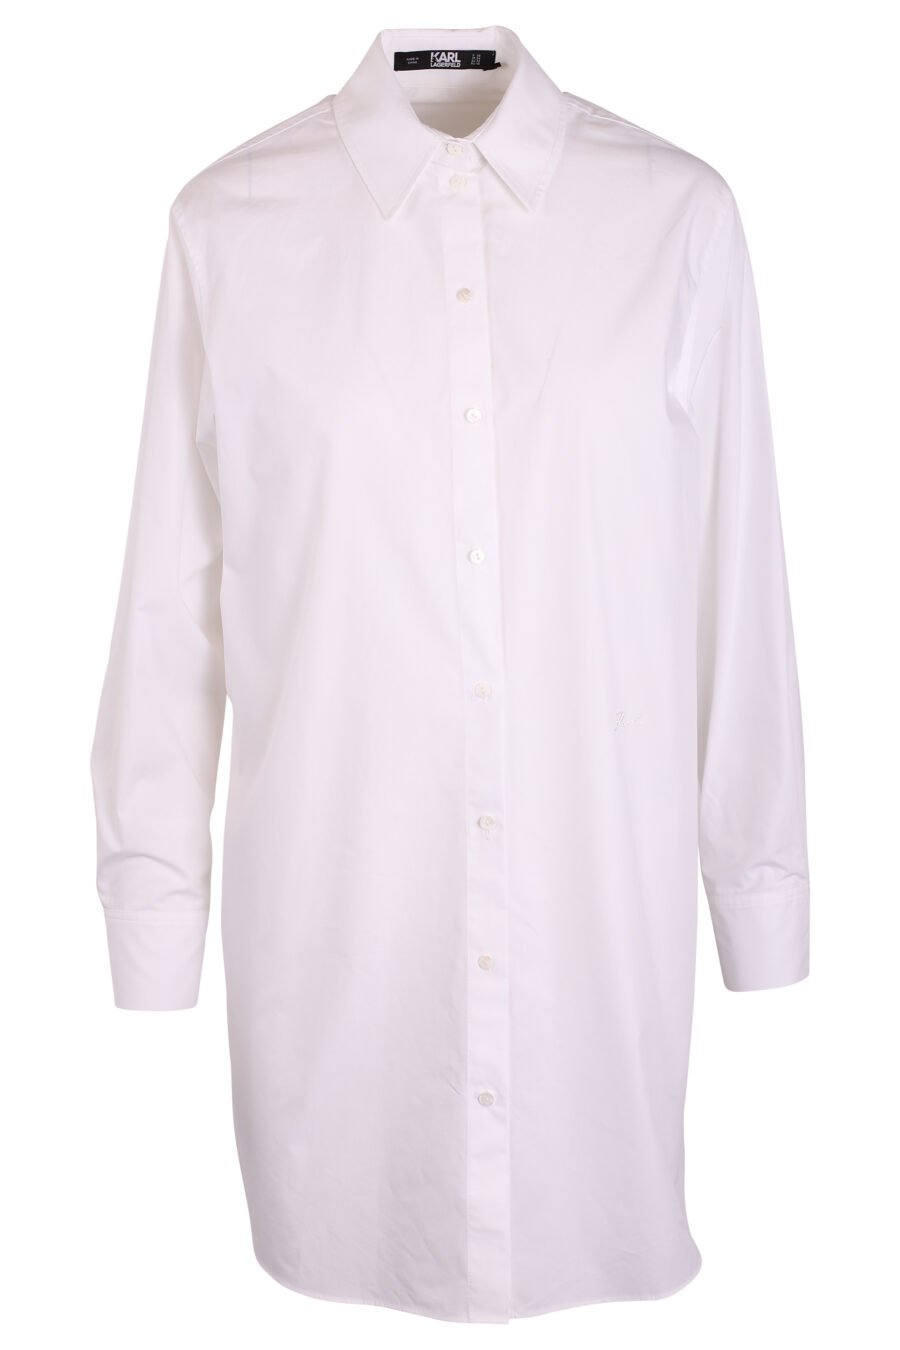 Camisa blanca larga con logo strass - IMG 3422